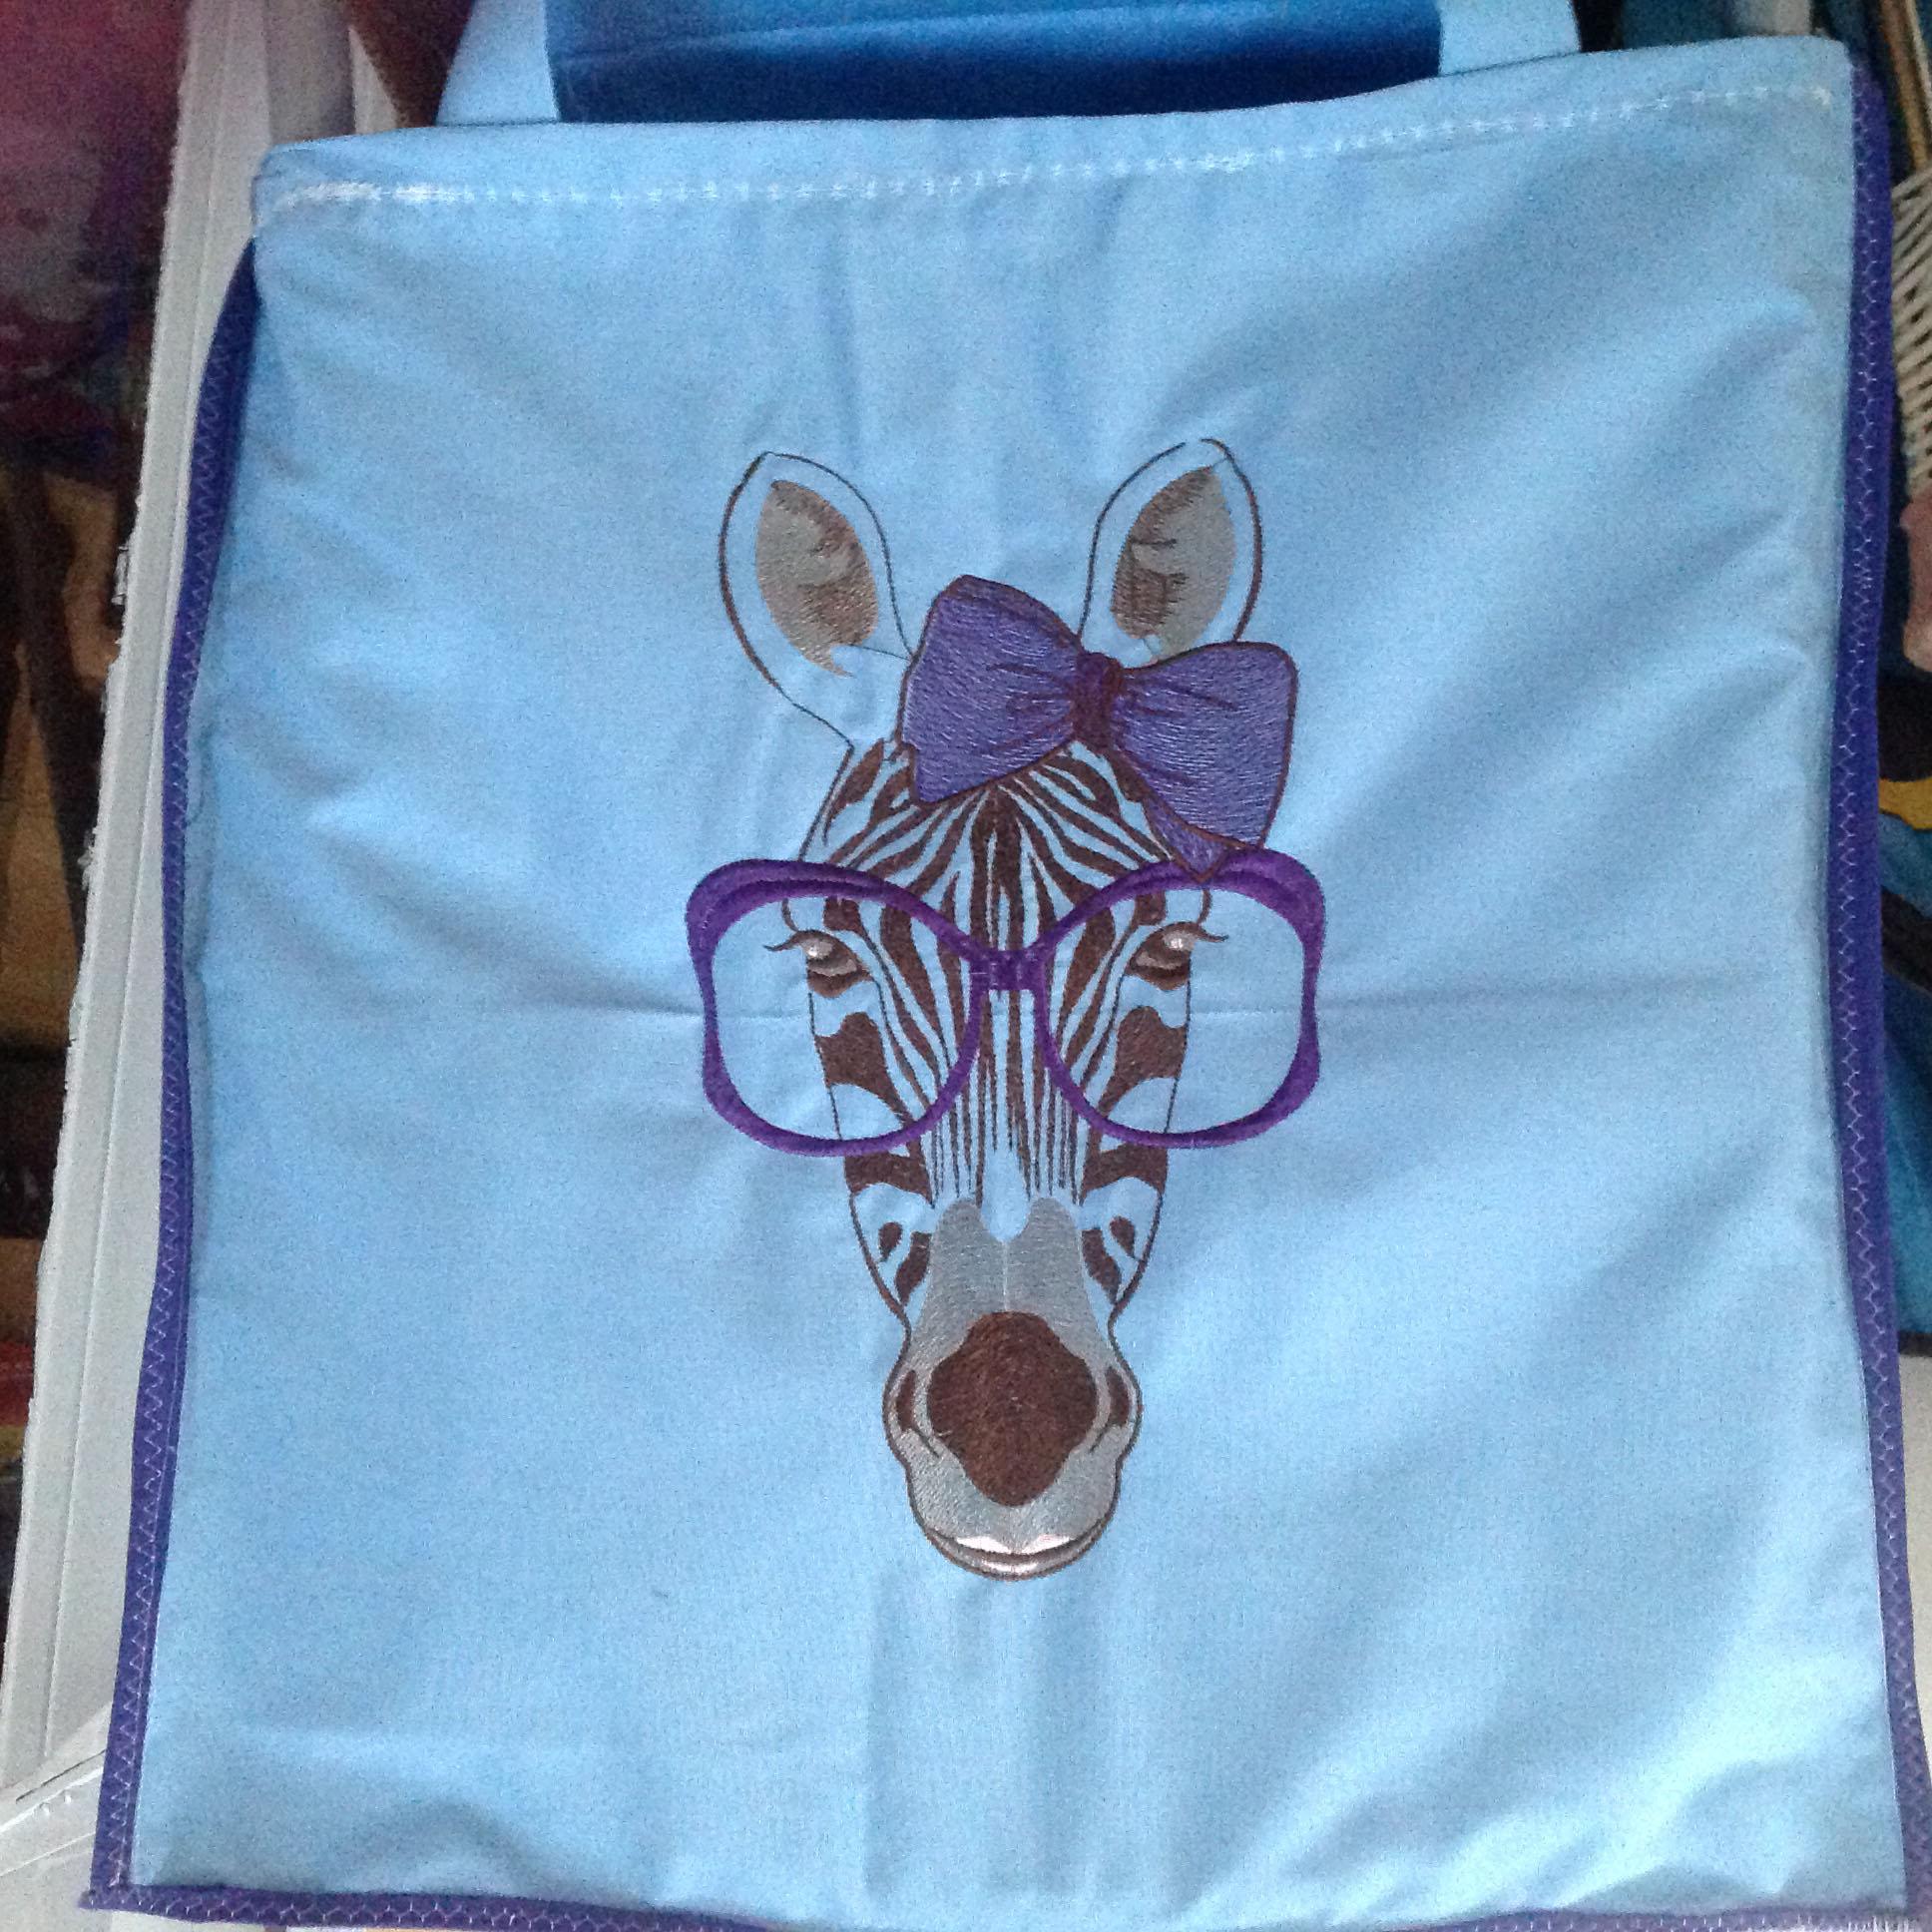 Embroidered bag with zebra design